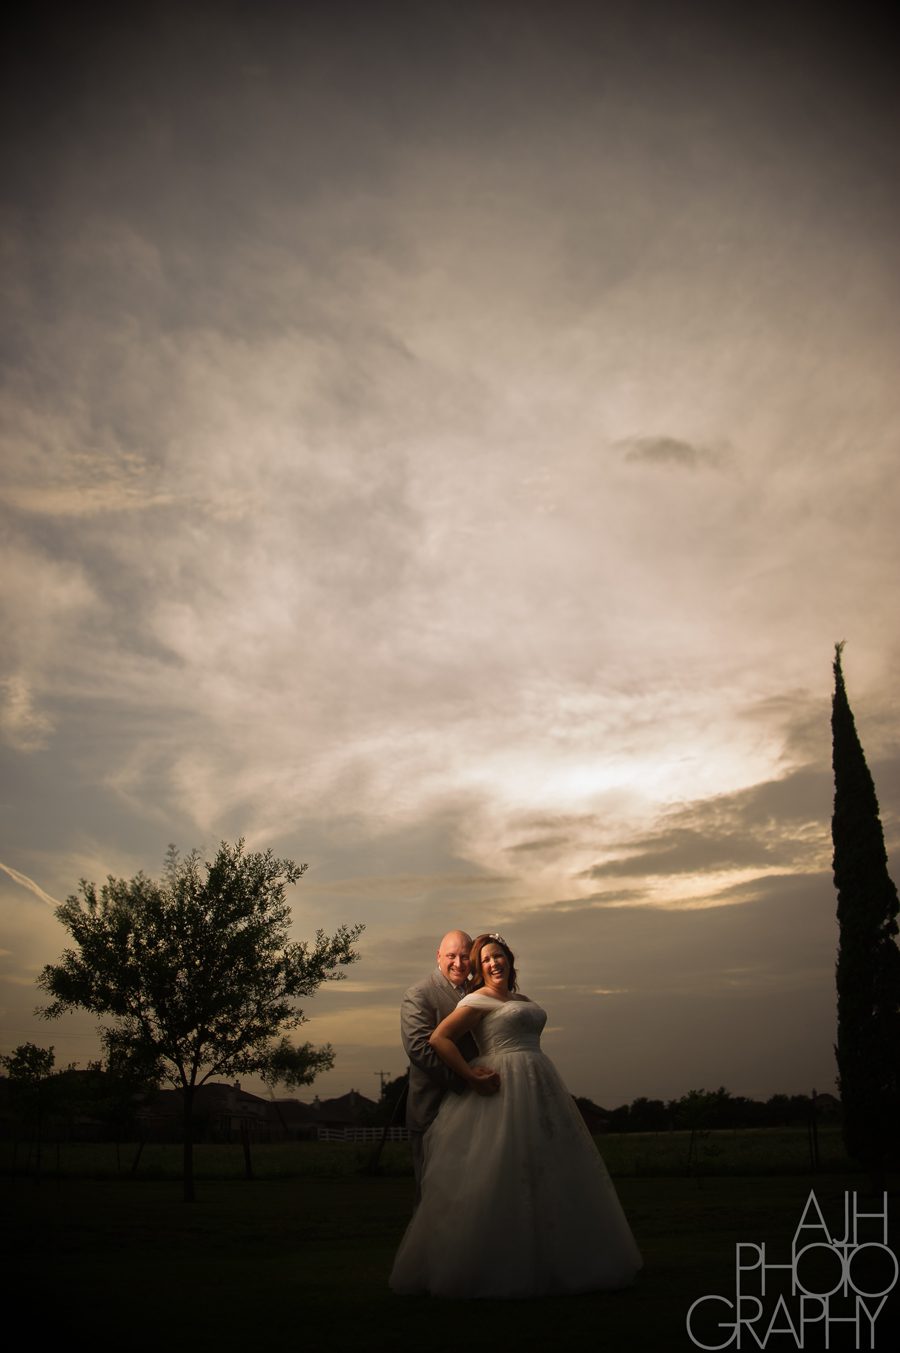 The Plantation House Wedding Photography - AJH Photography